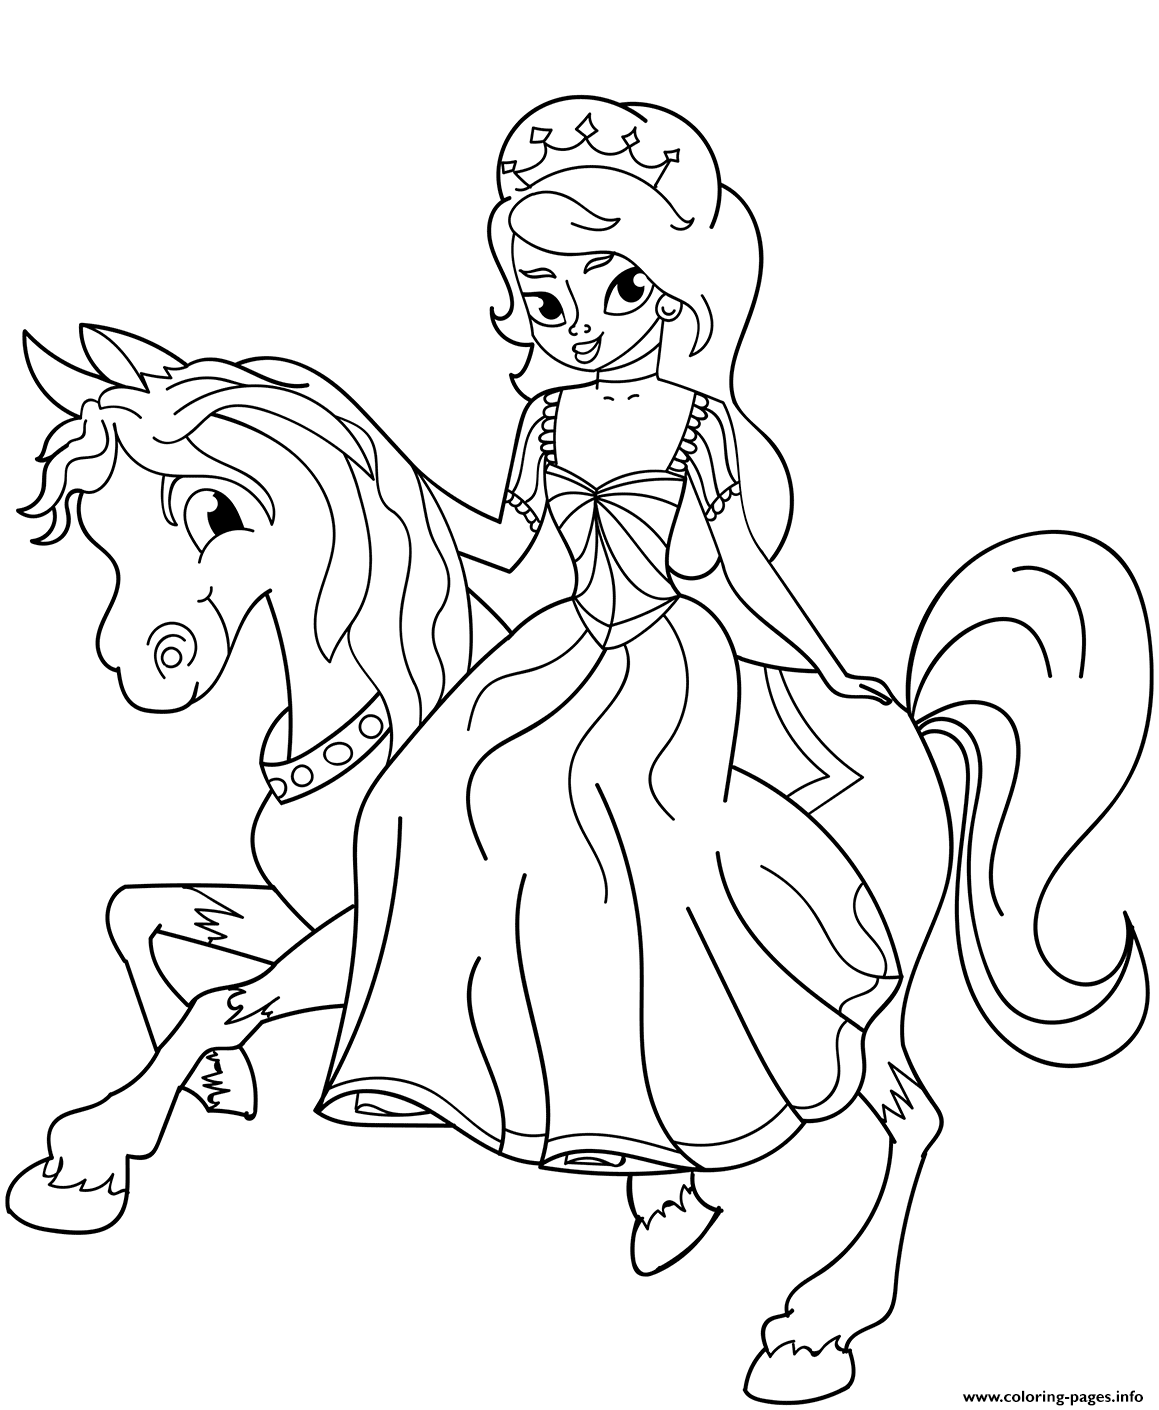 Princess Riding Horse coloring